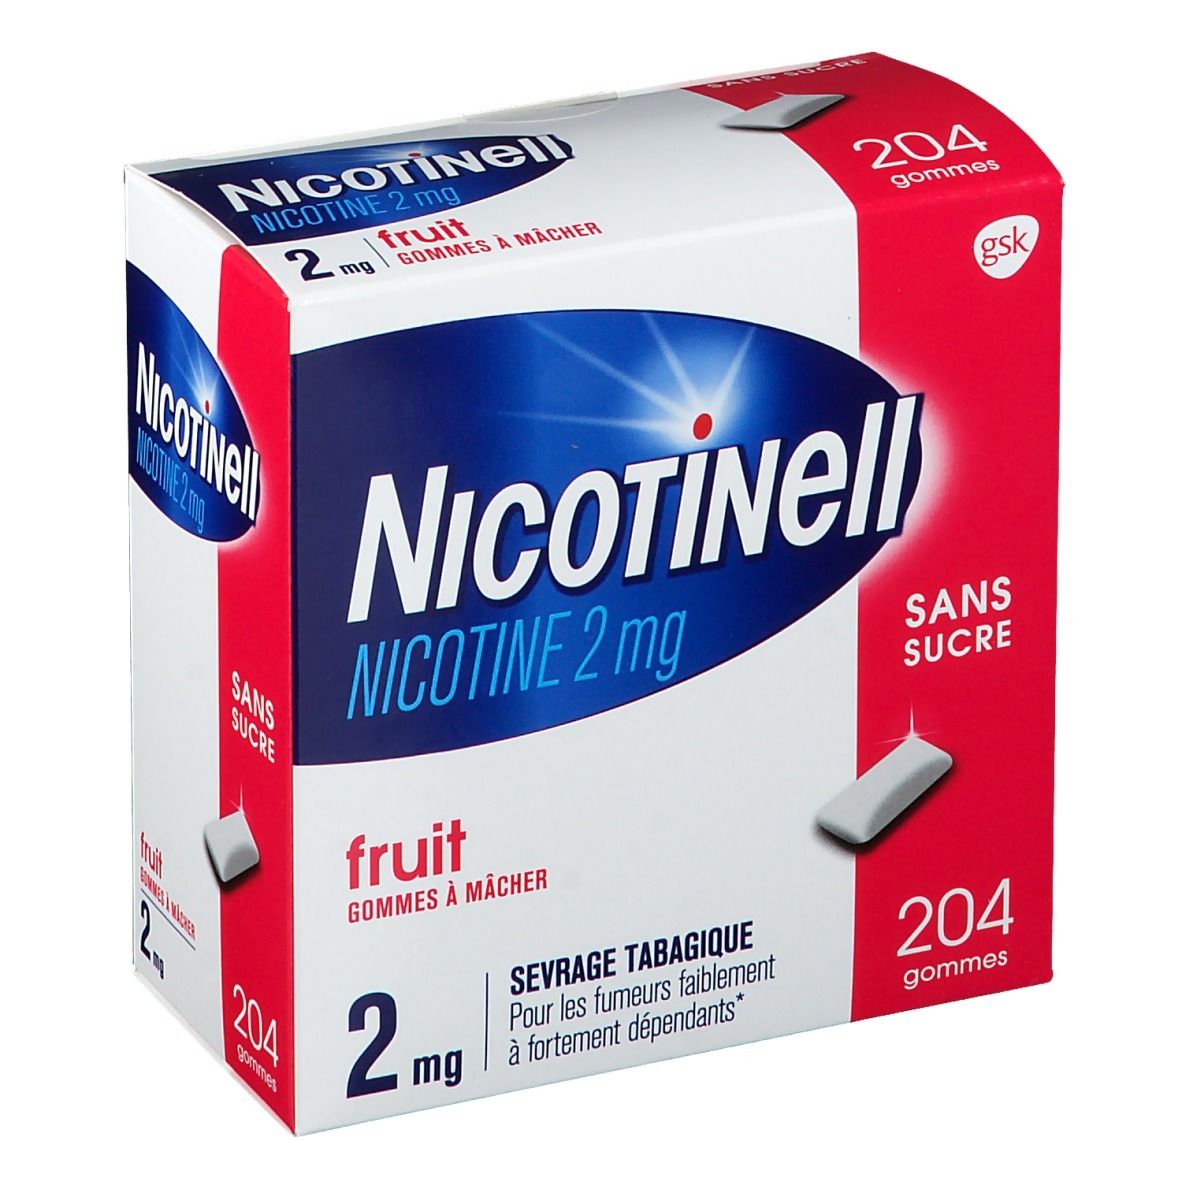 Nicotinell® Fruit s/s 2 mg